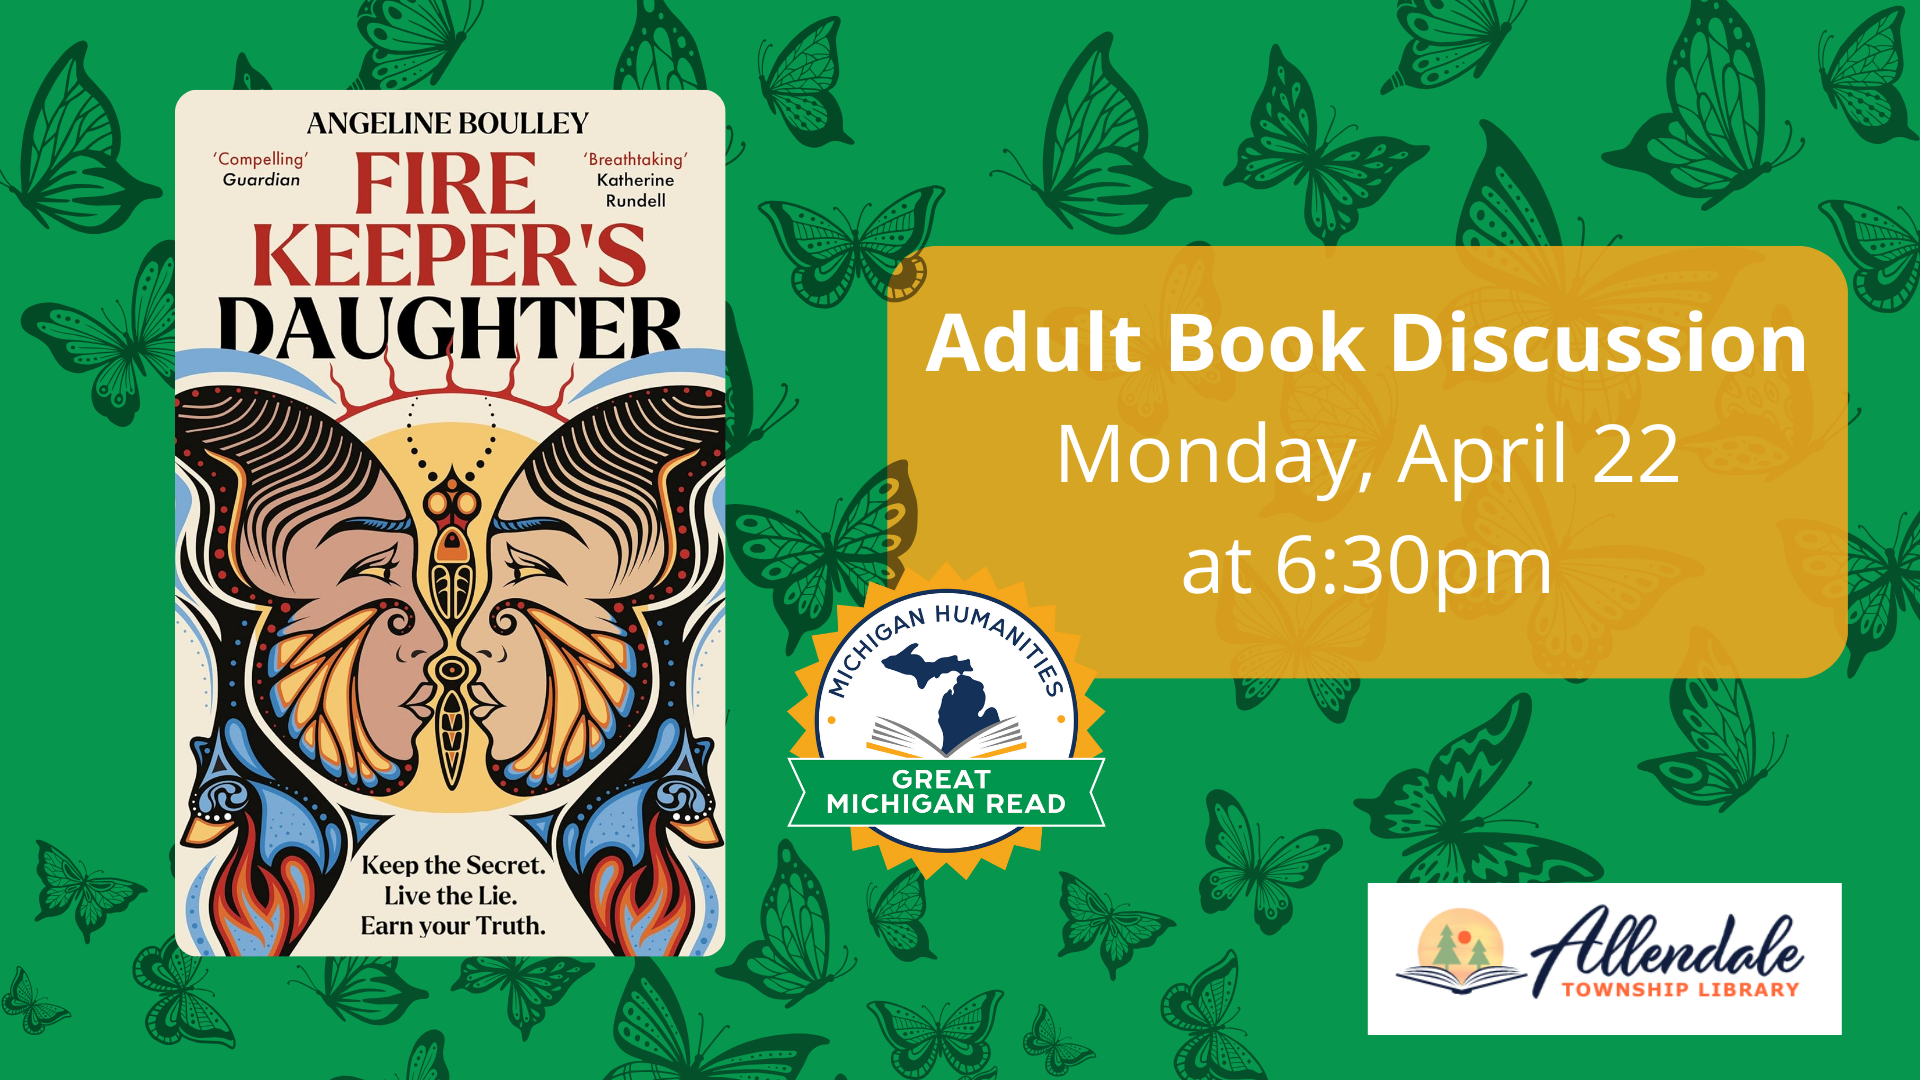 Adult Book Discussion Monday, April 22, 6:30 PM